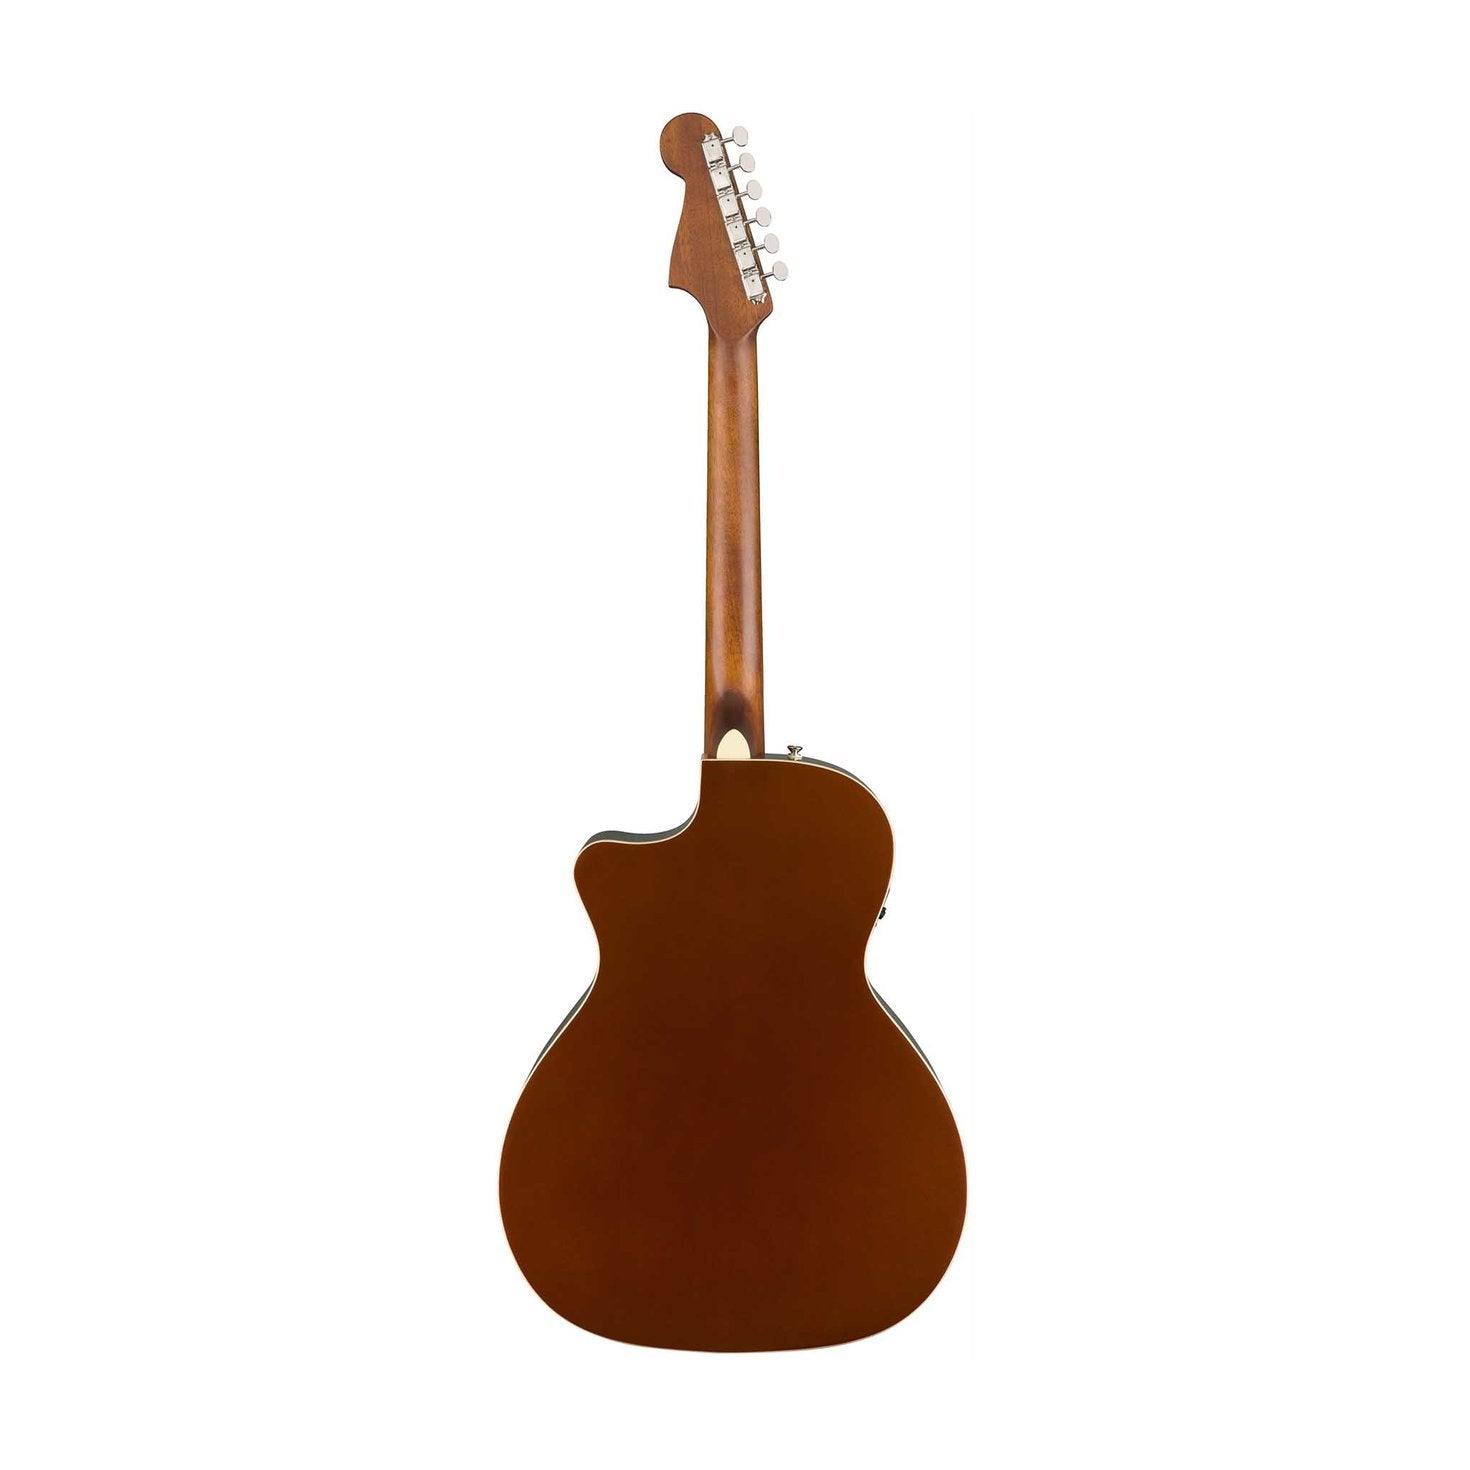 Fender Newporter Player Medium-Sized Acoustic Guitar, Rustic Copper, FENDER, ACOUSTIC GUITAR, fender-acoustic-guitar-f03-097-0743-096, ZOSO MUSIC SDN BHD